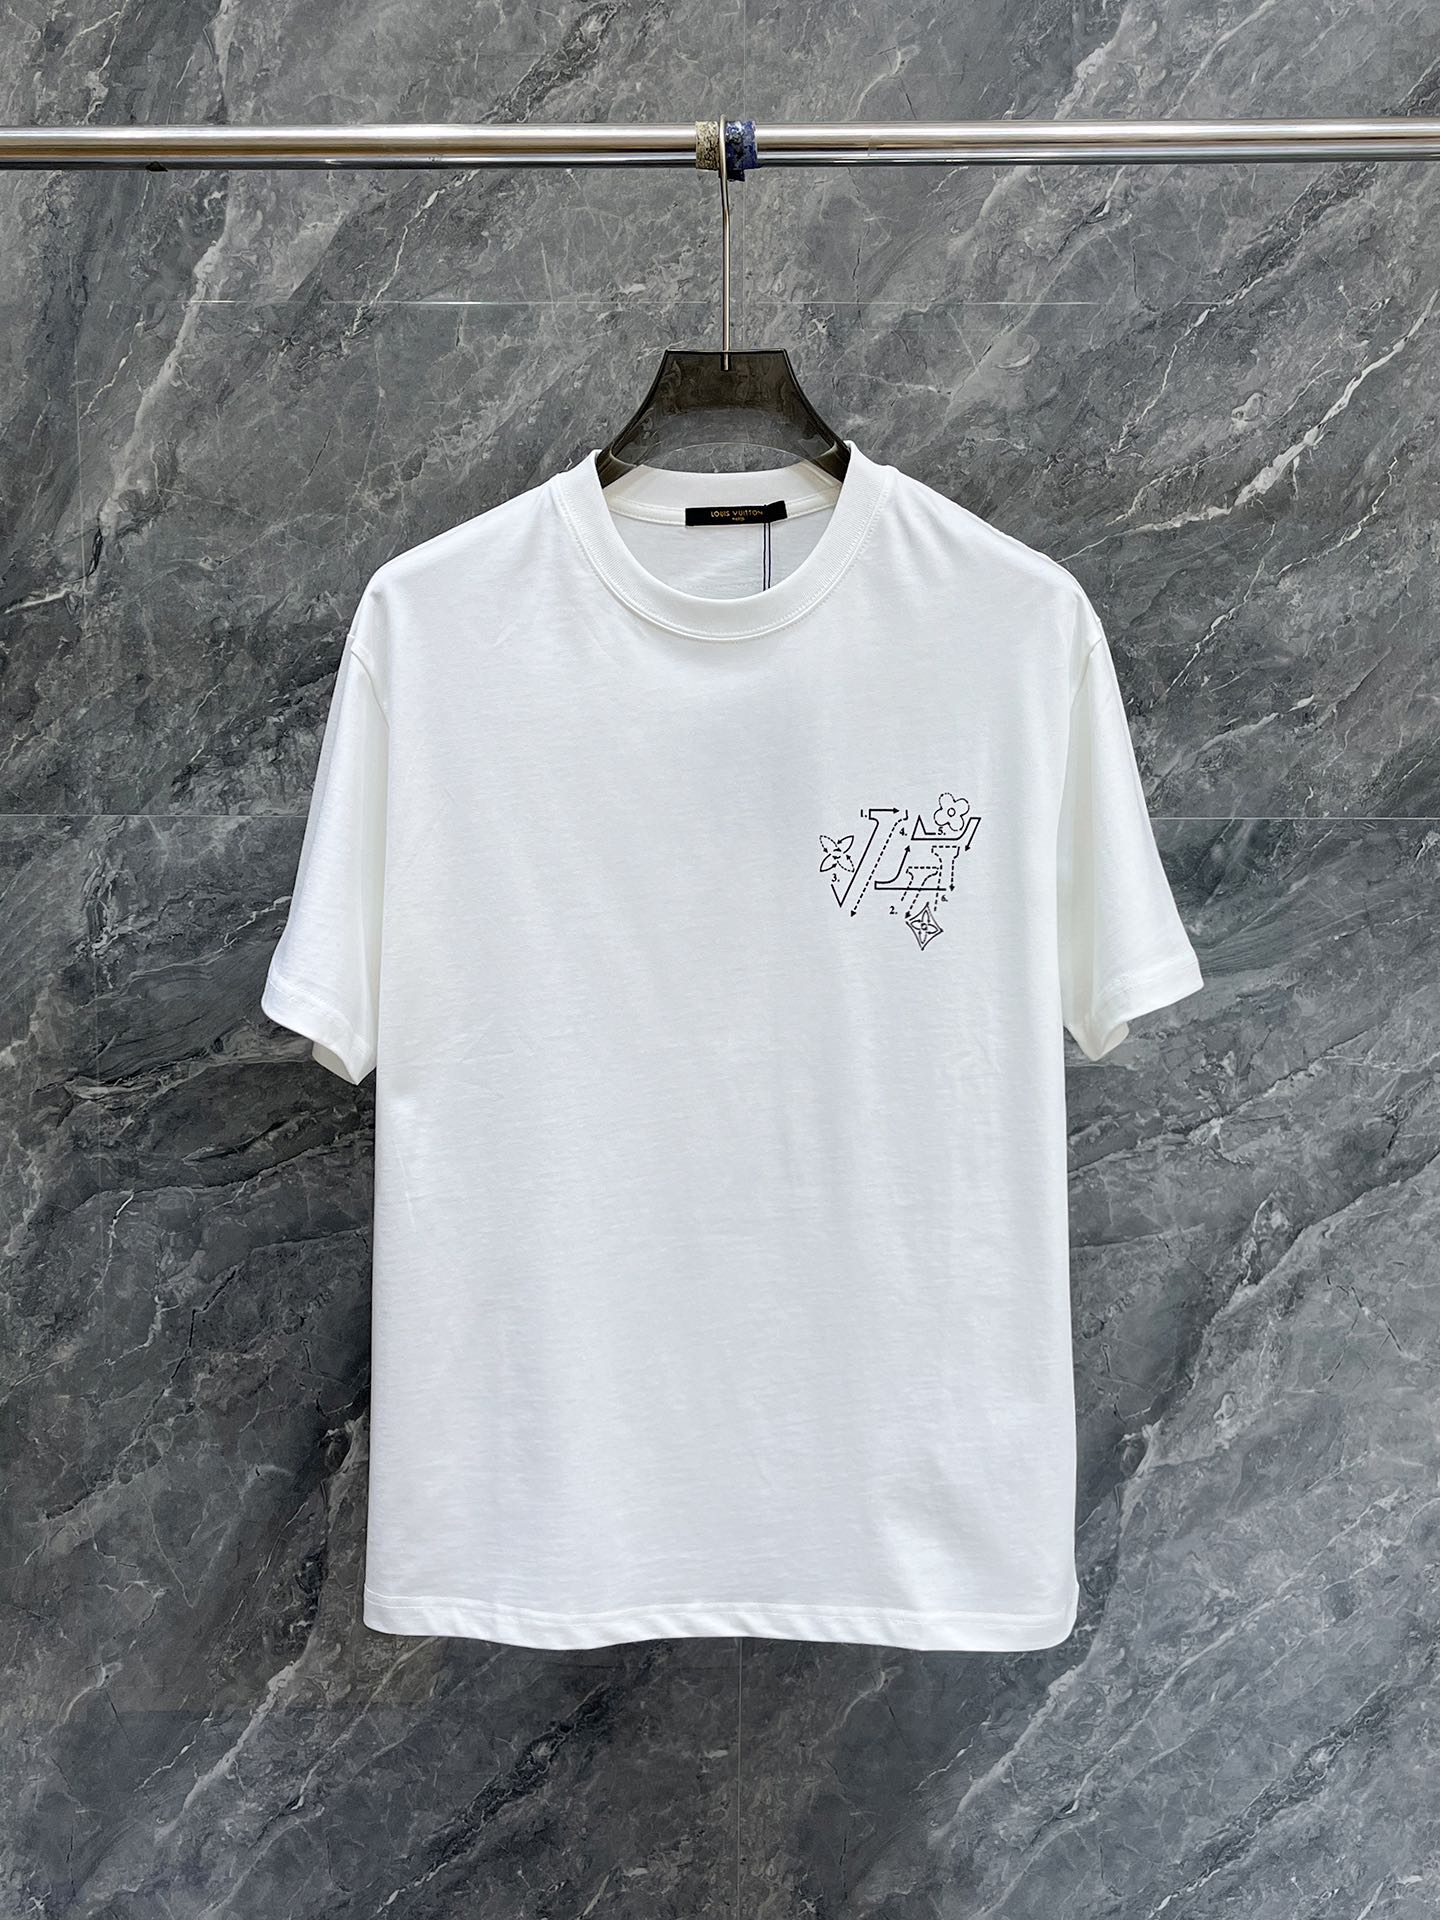 Wholesale Designer Shop
 Louis Vuitton Clothing T-Shirt Black White Printing Cotton Fashion Short Sleeve